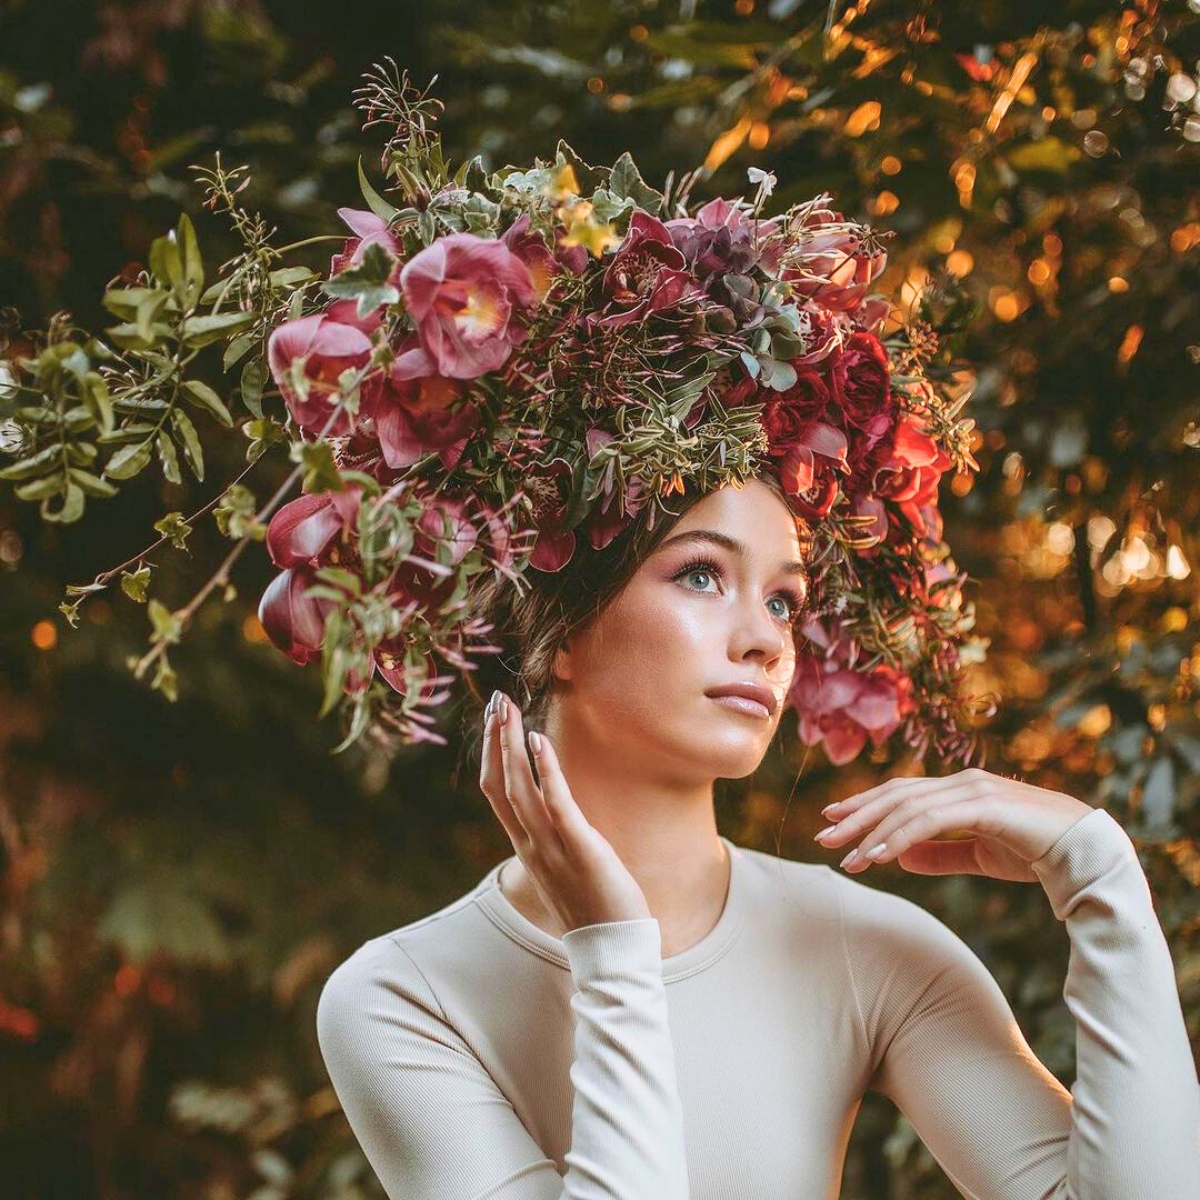 Floral headpiece designed by Julia Rose